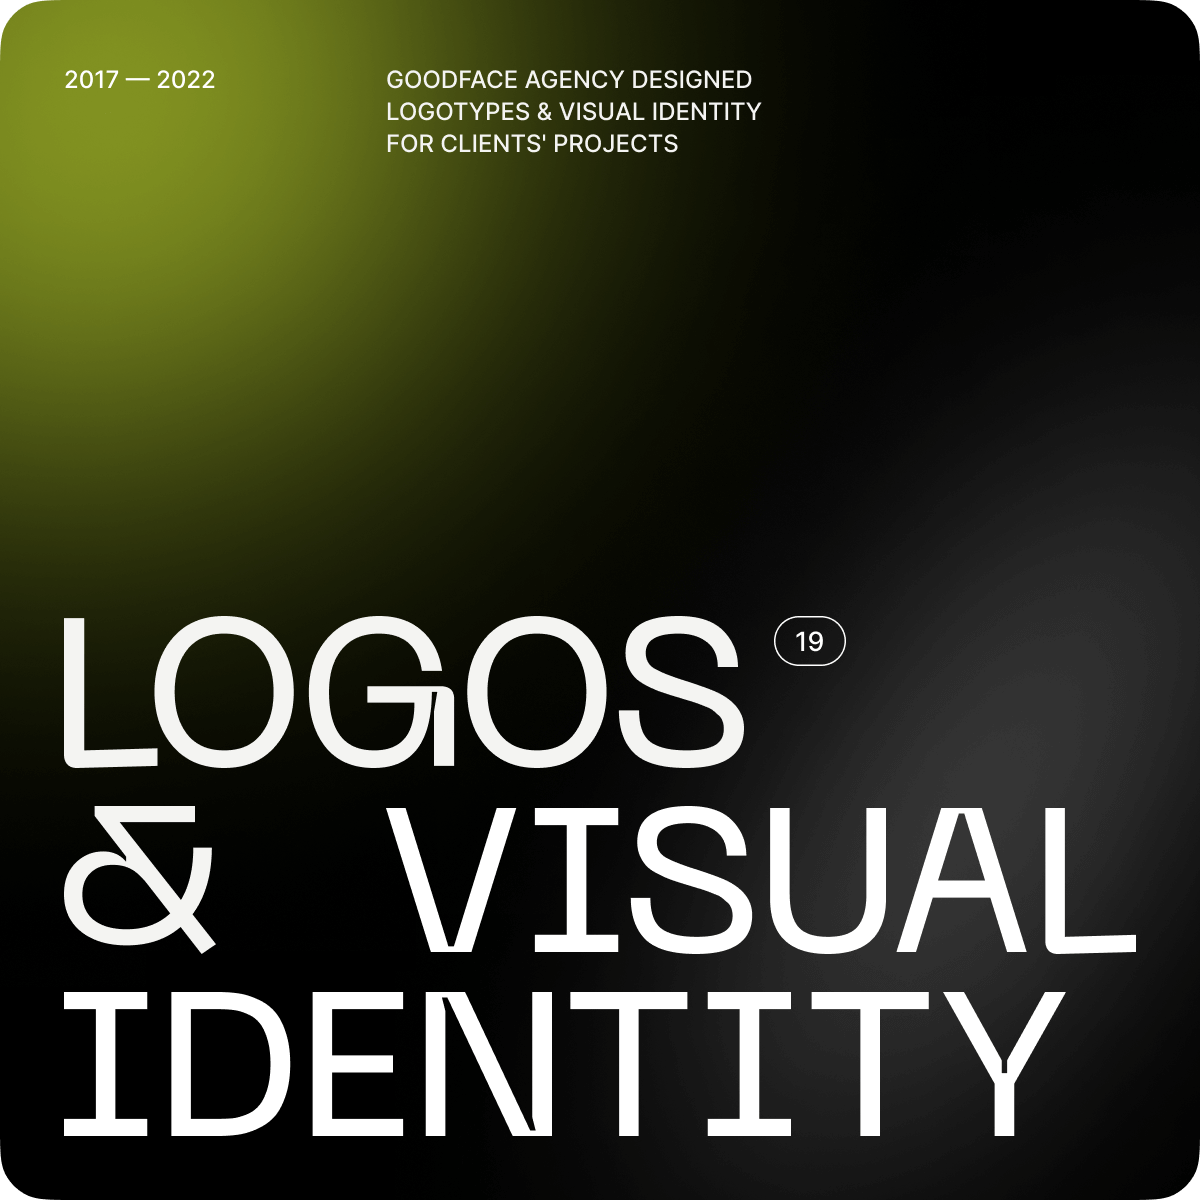 Brand identity - goodface.agency